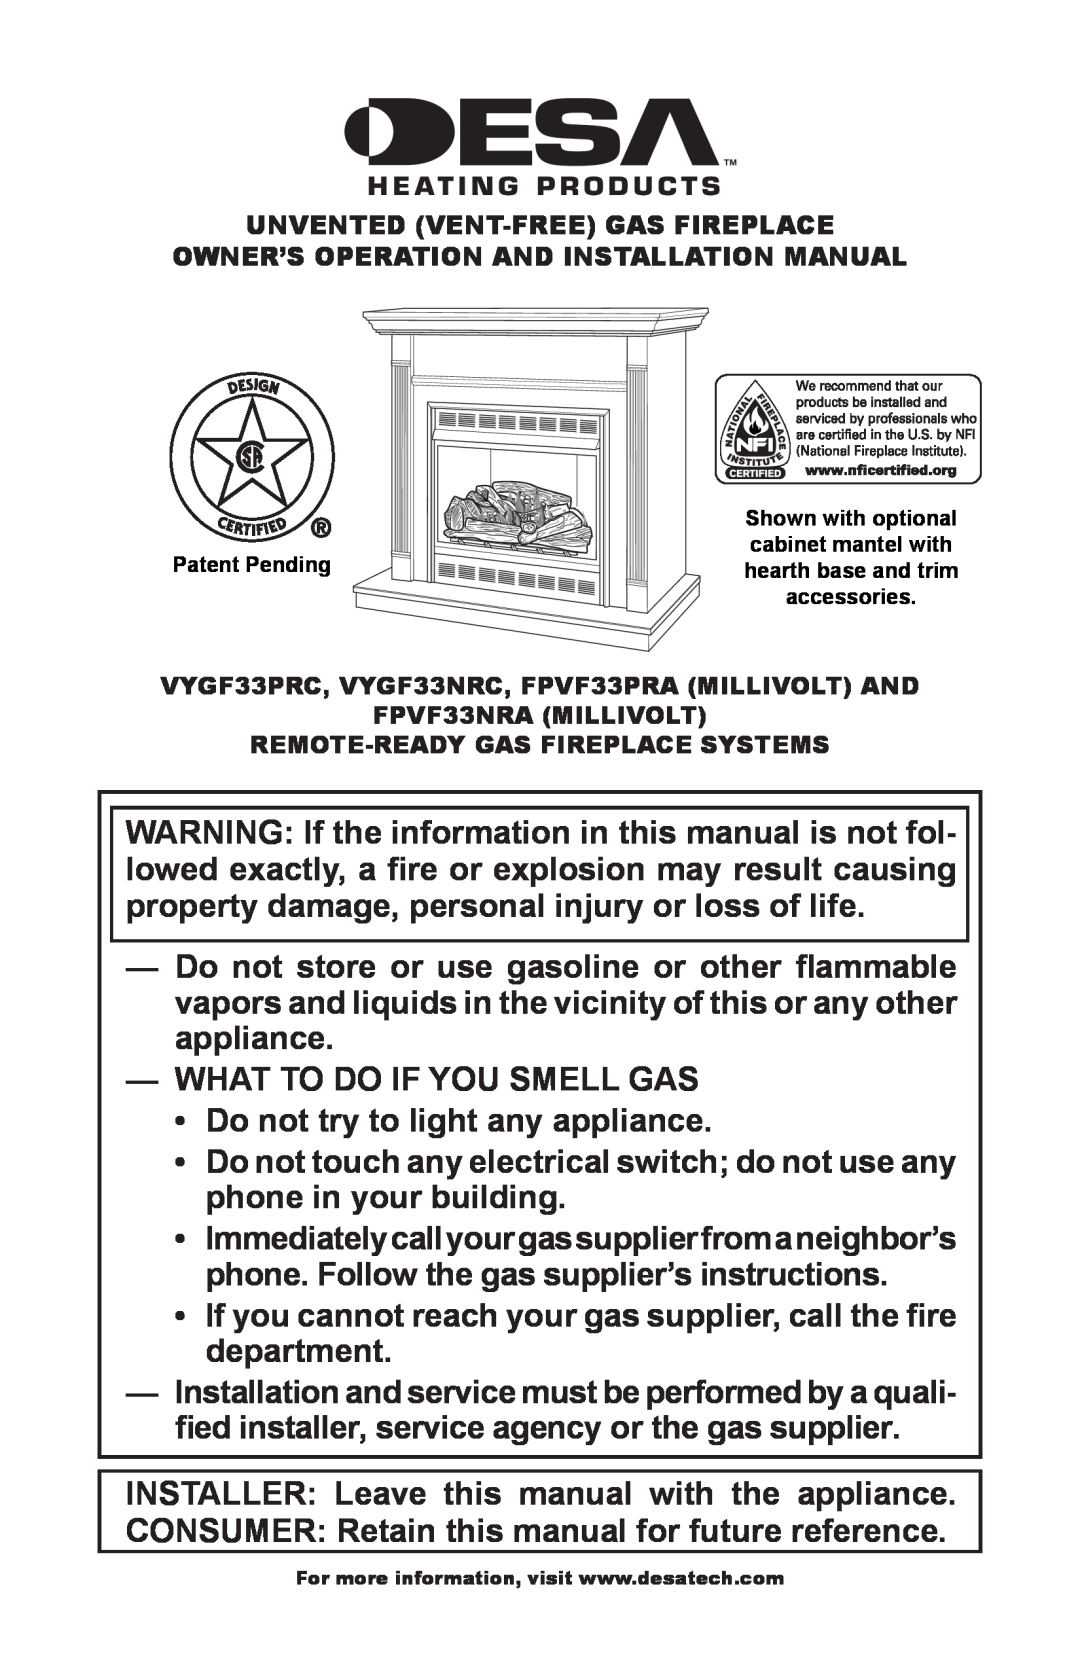 Desa VYGF33NRC, FPVF33PRA installation manual What To Do If You Smell Gas 